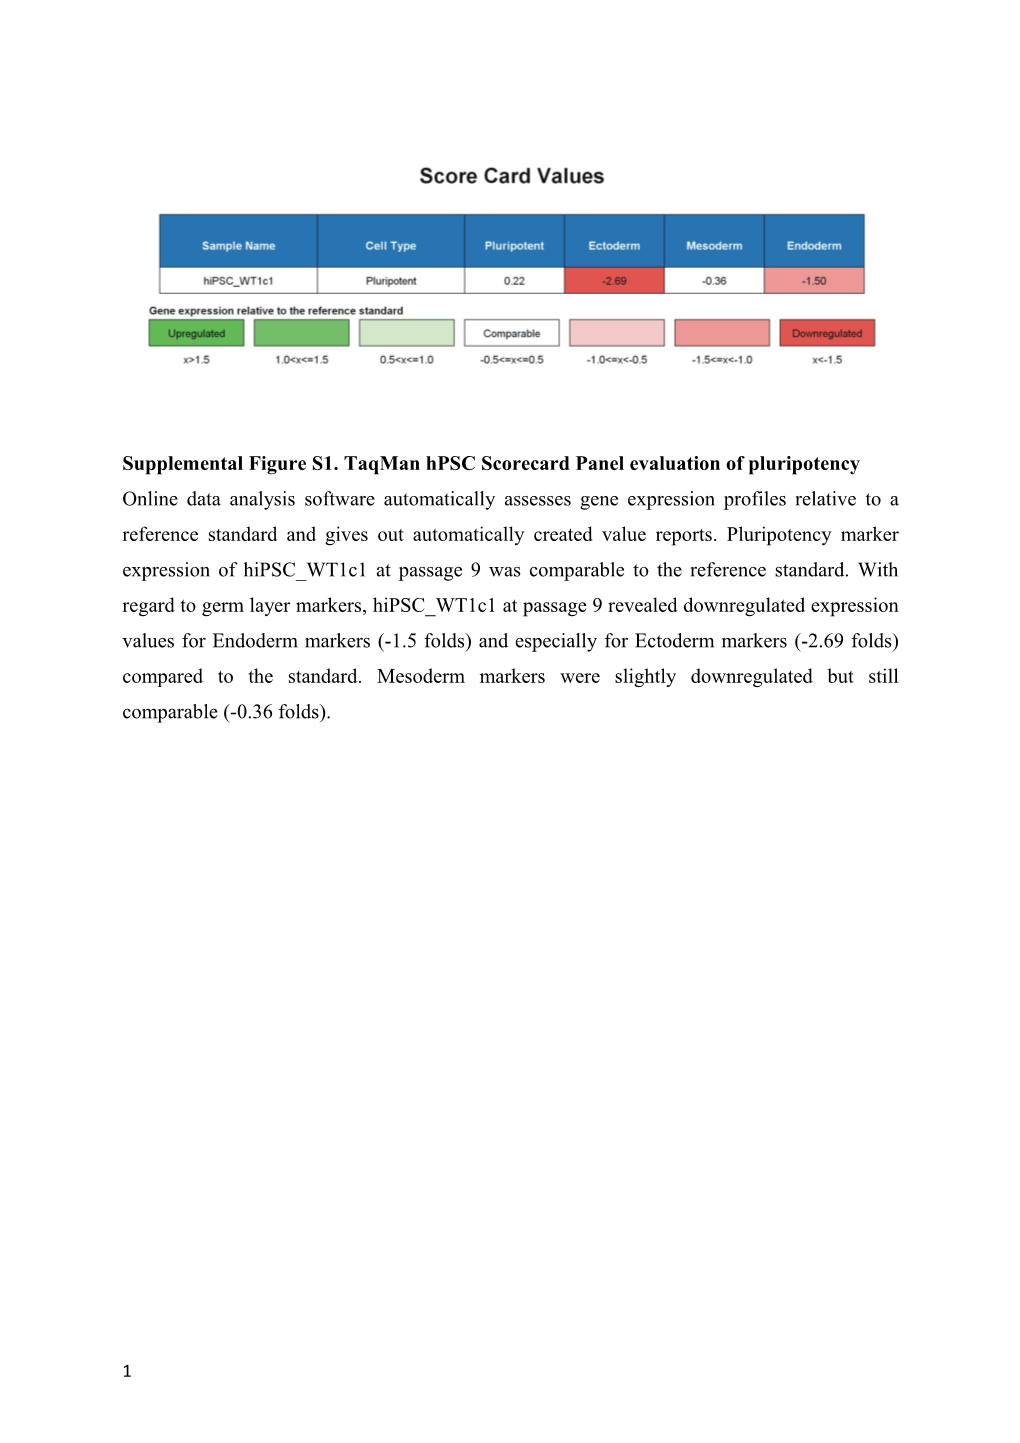 Supplemental Figure S1. Taqman Hpsc Scorecard Panel Evaluation of Pluripotency